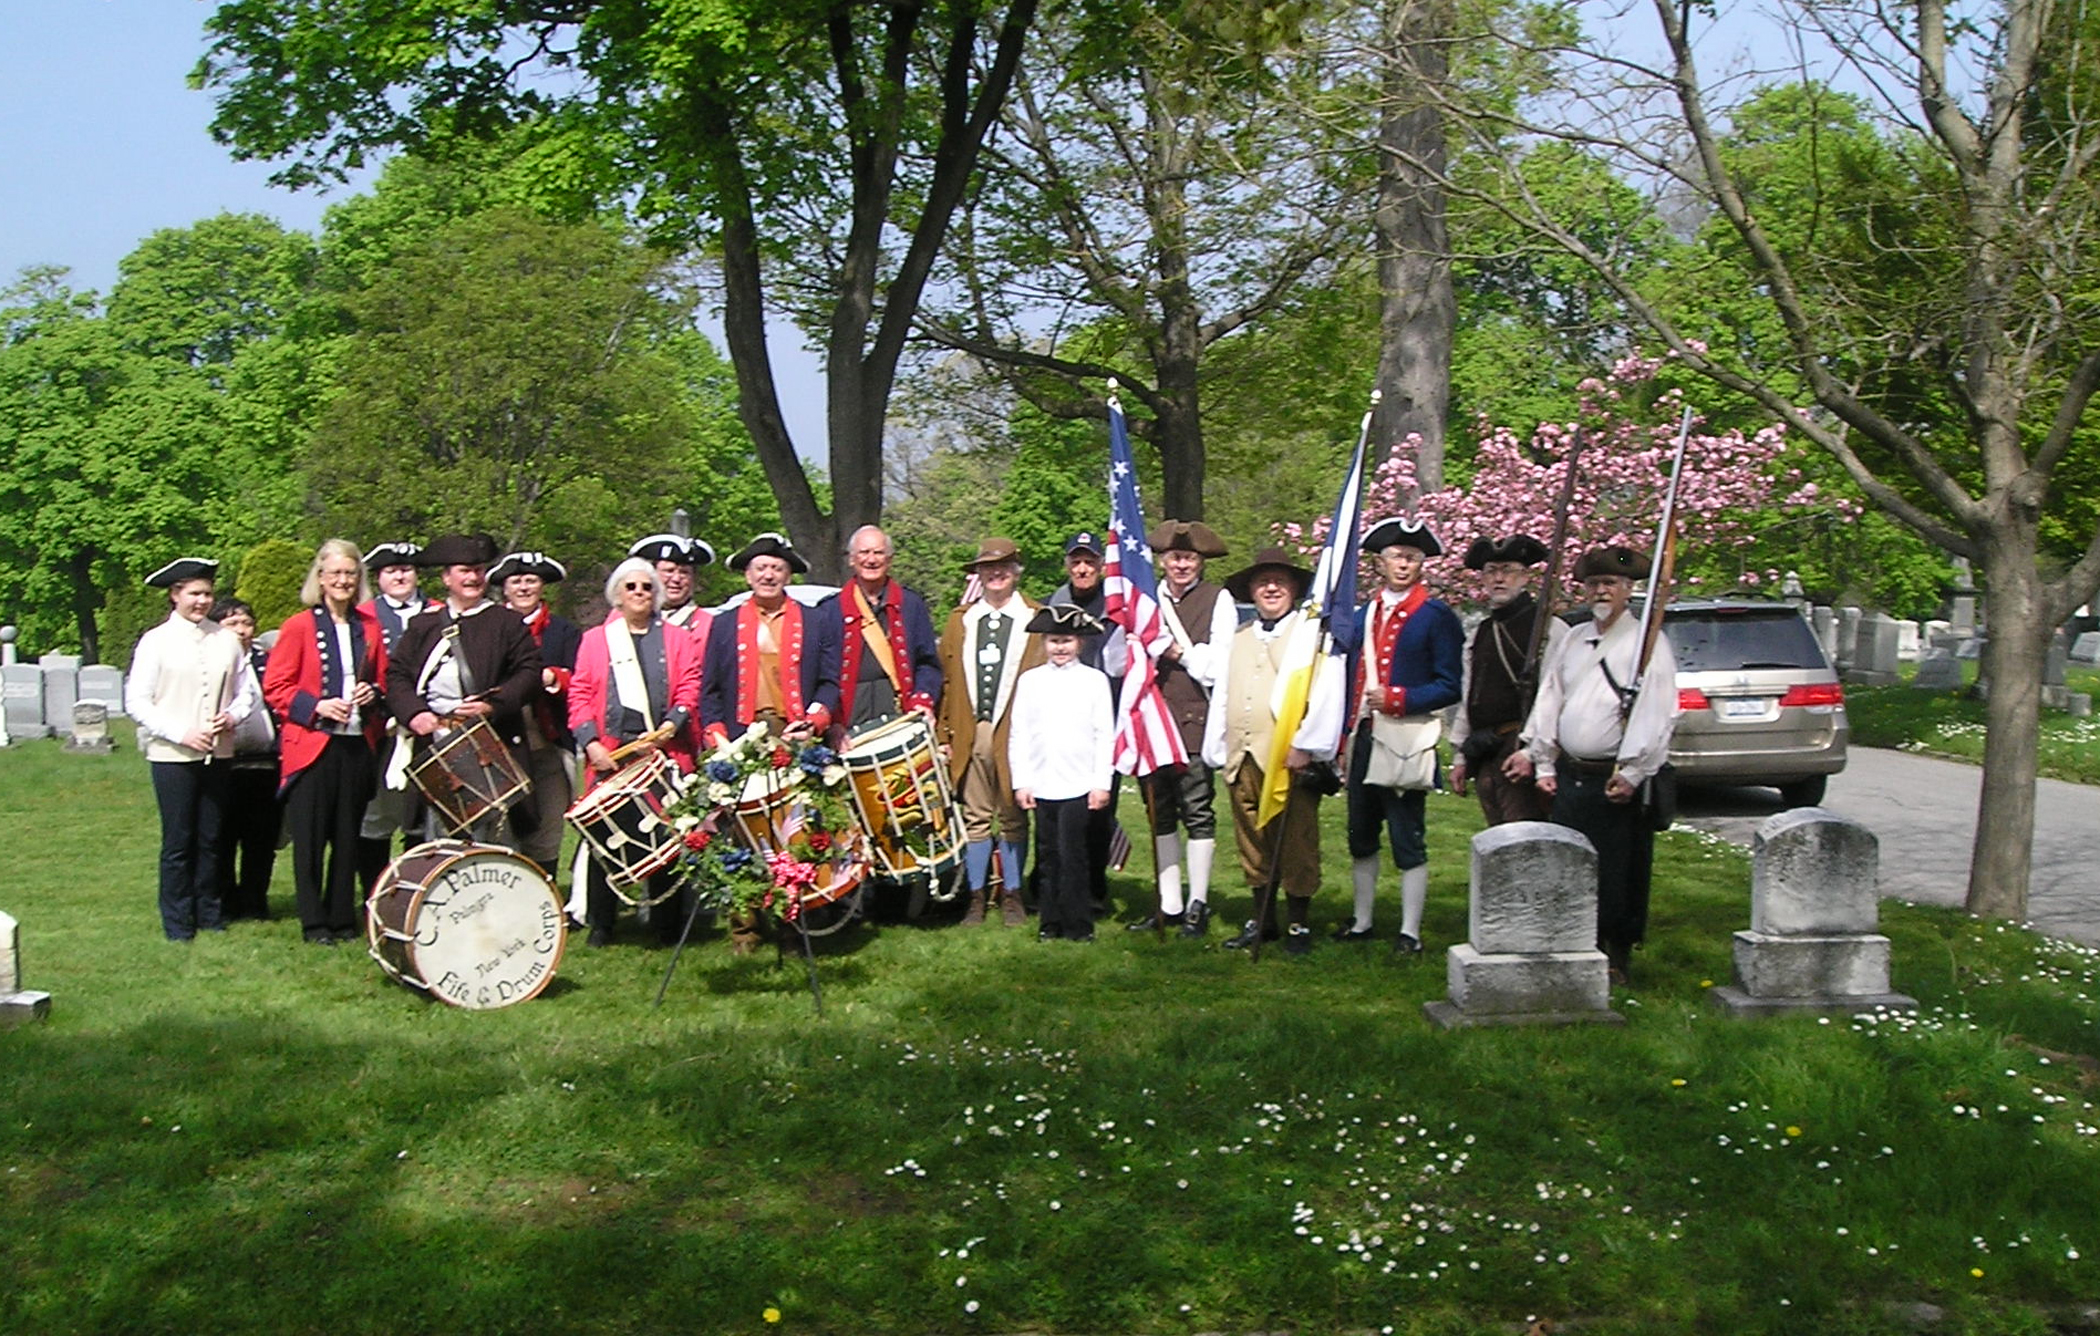 Millener Gravesite, Mt. Hope Cemetery, Rochester, New York - May 3, 2012